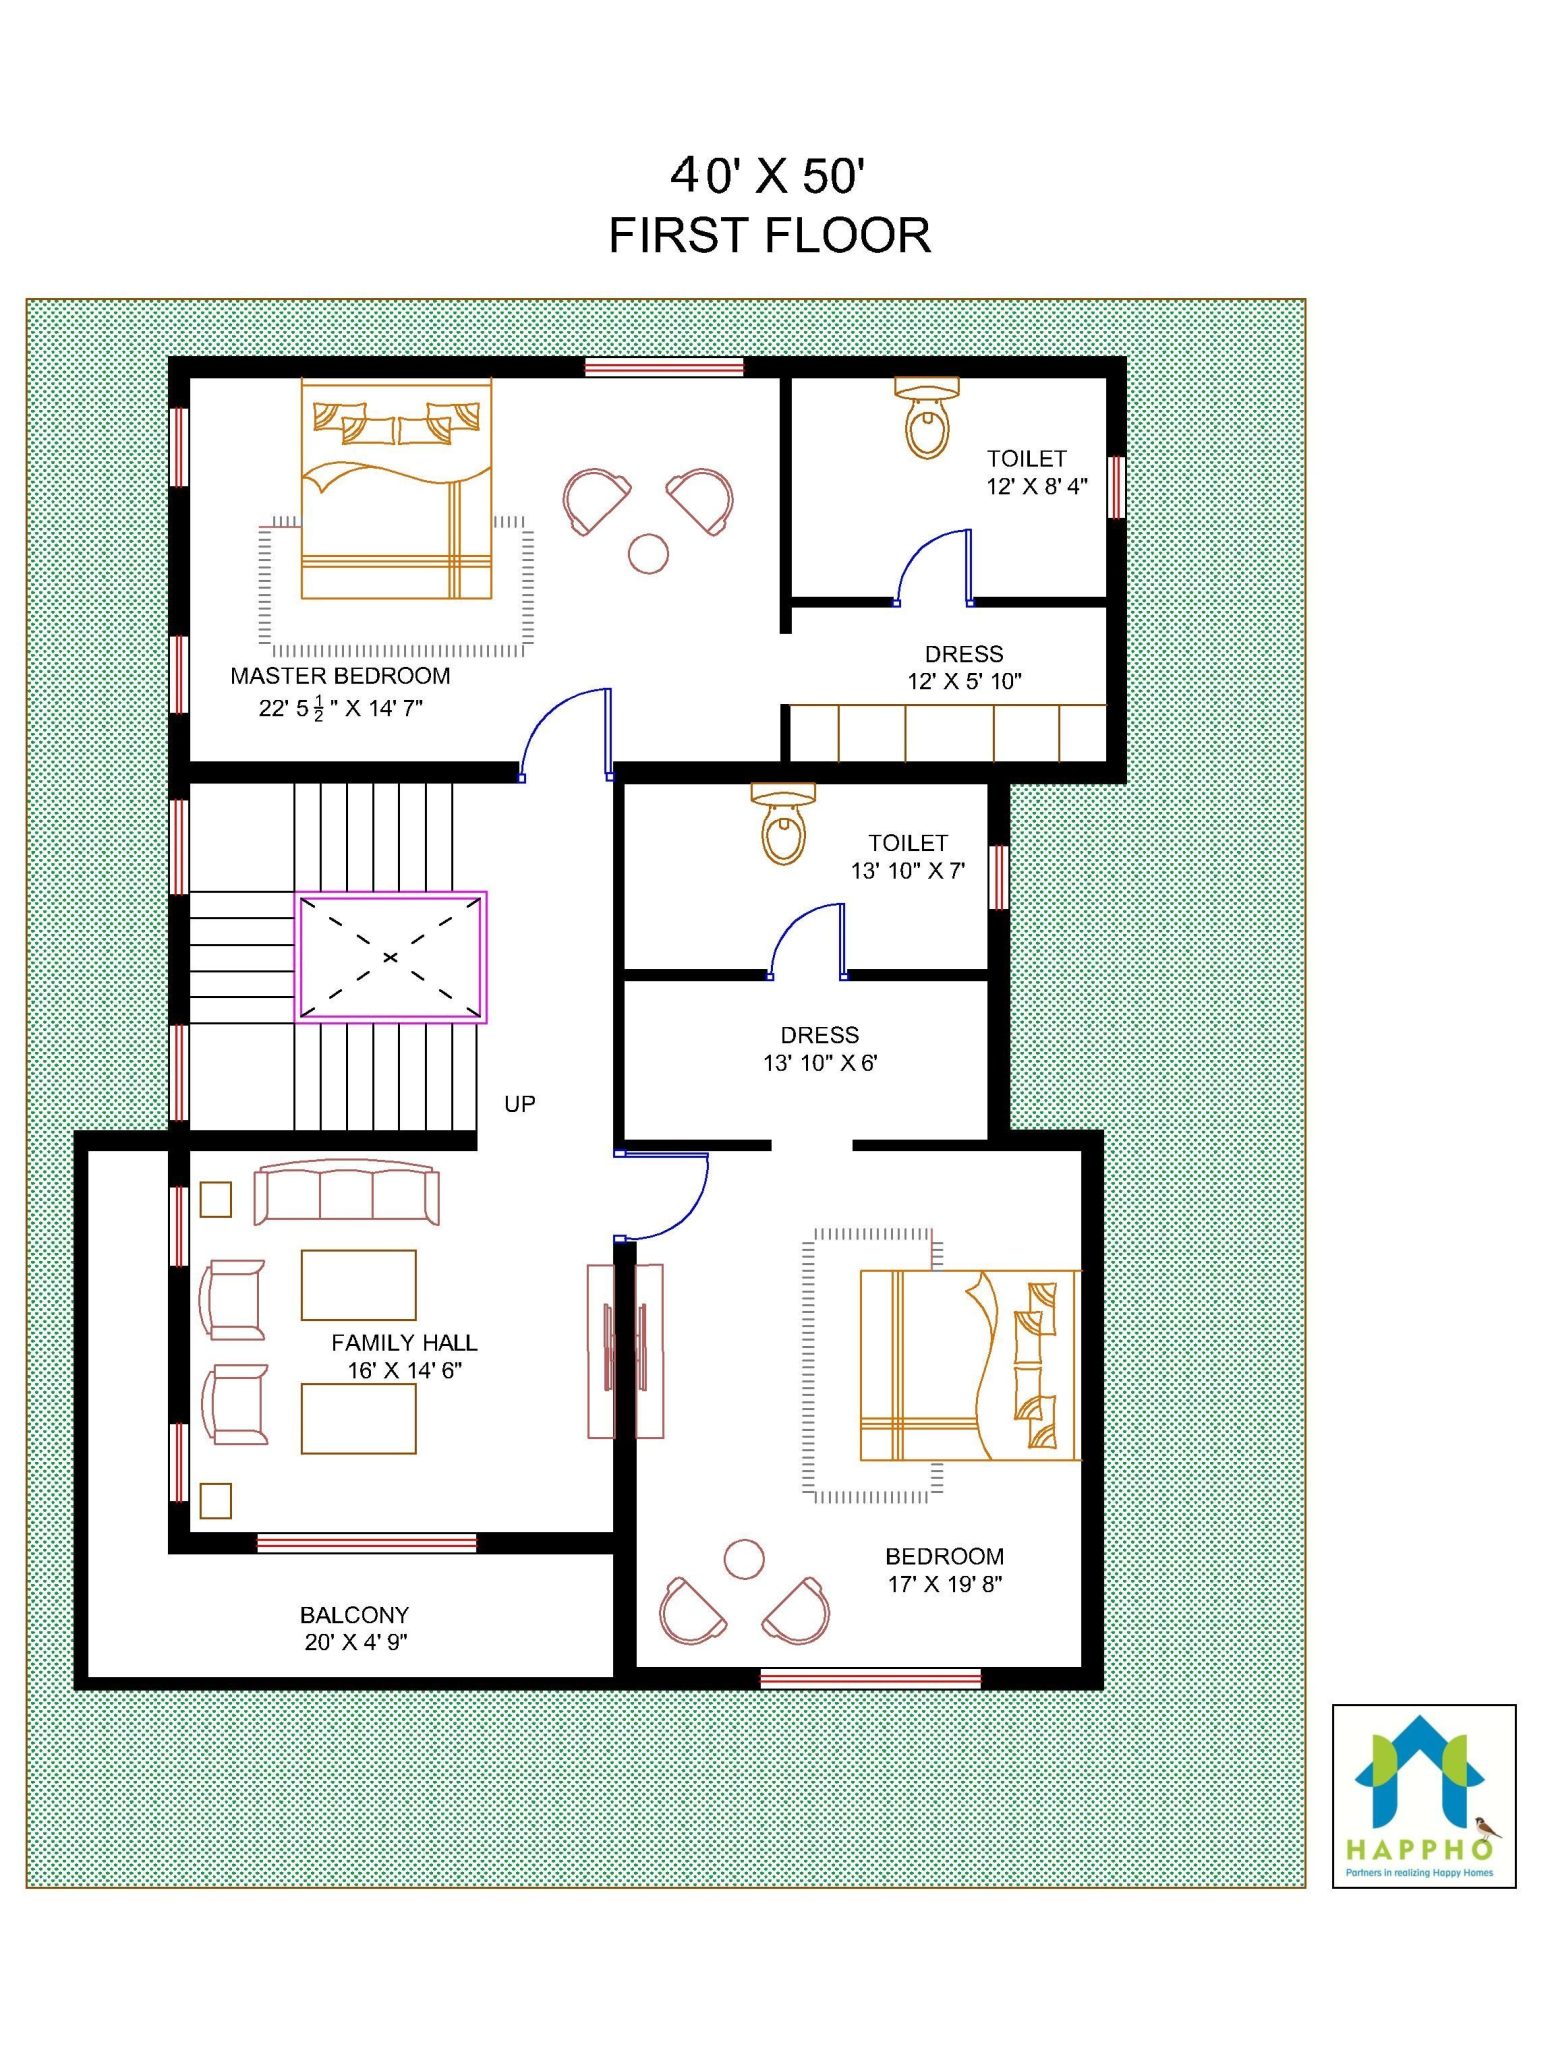 3bhk floor plan, 2000 square feet floor plan, 40feet x 50feet plan, Duplex floor plan, bungalow floor plan